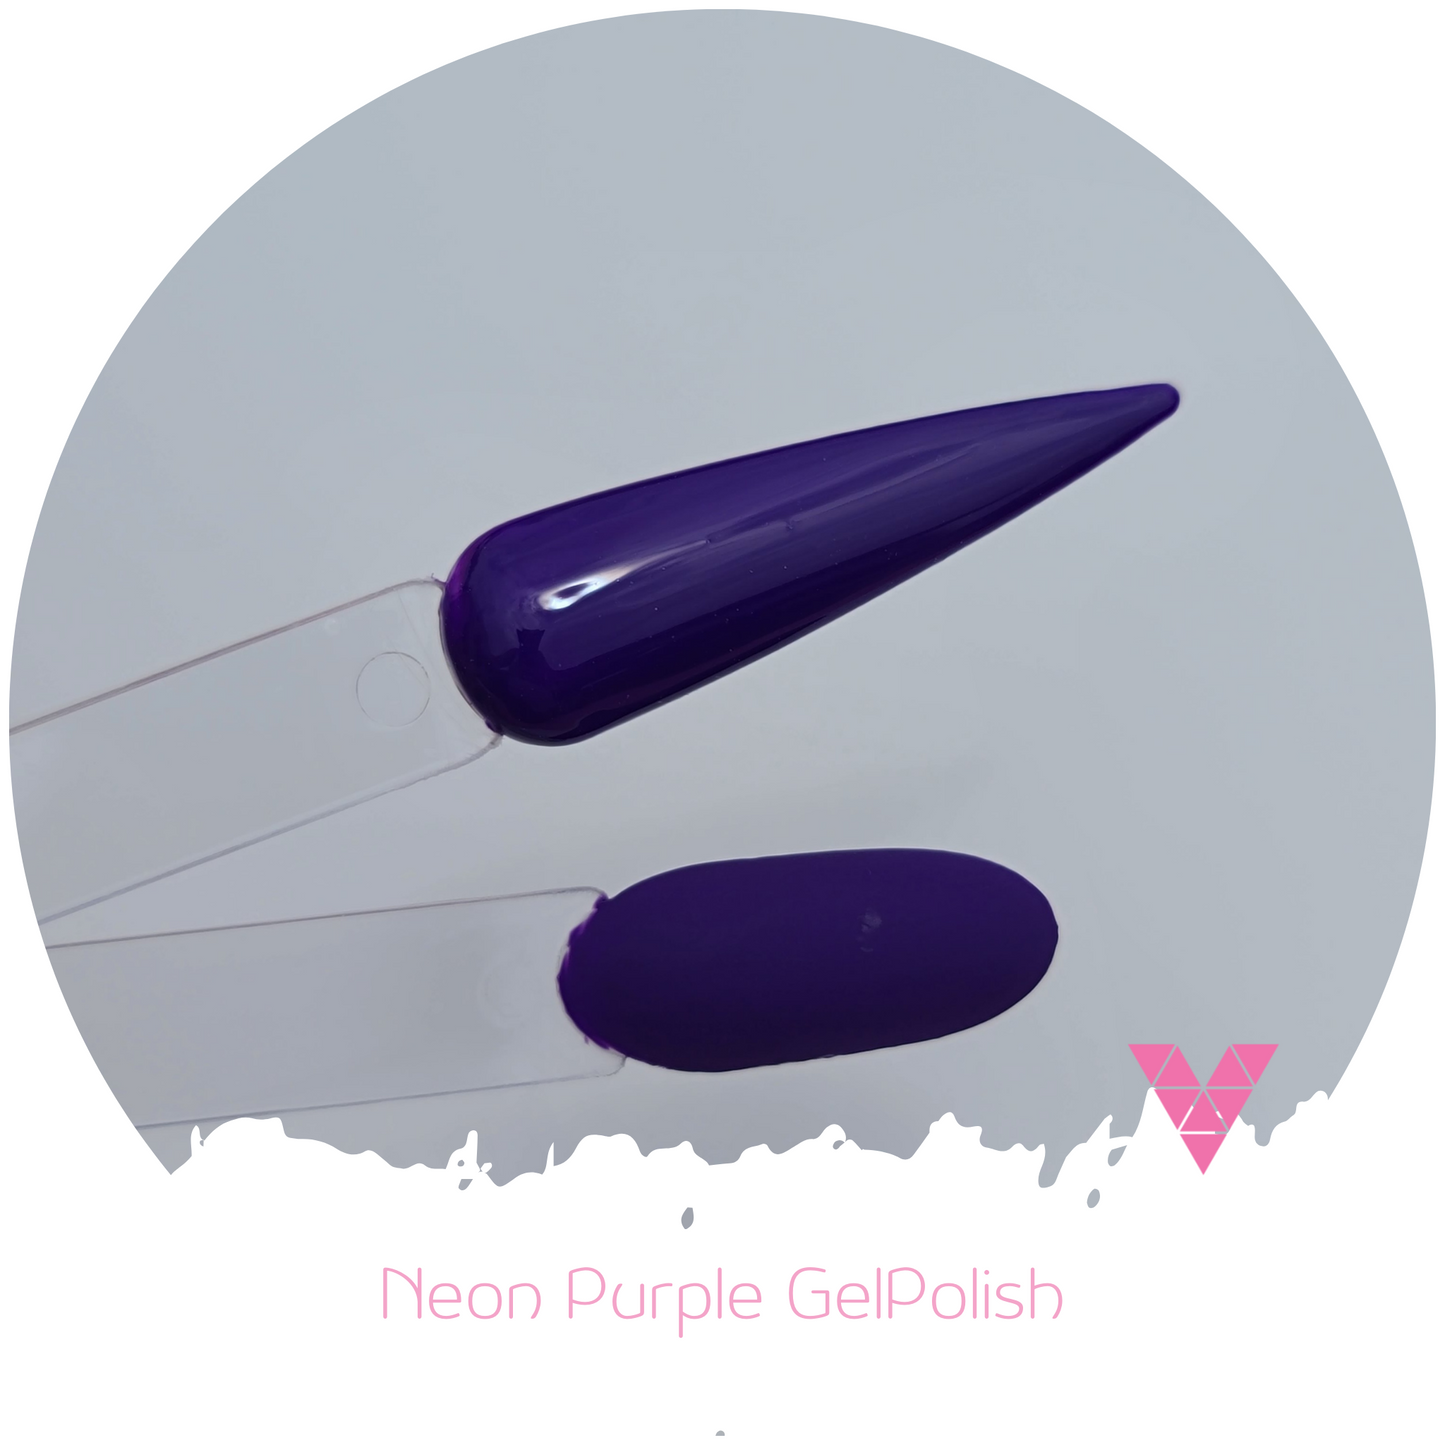 Neon Purple GelPolish